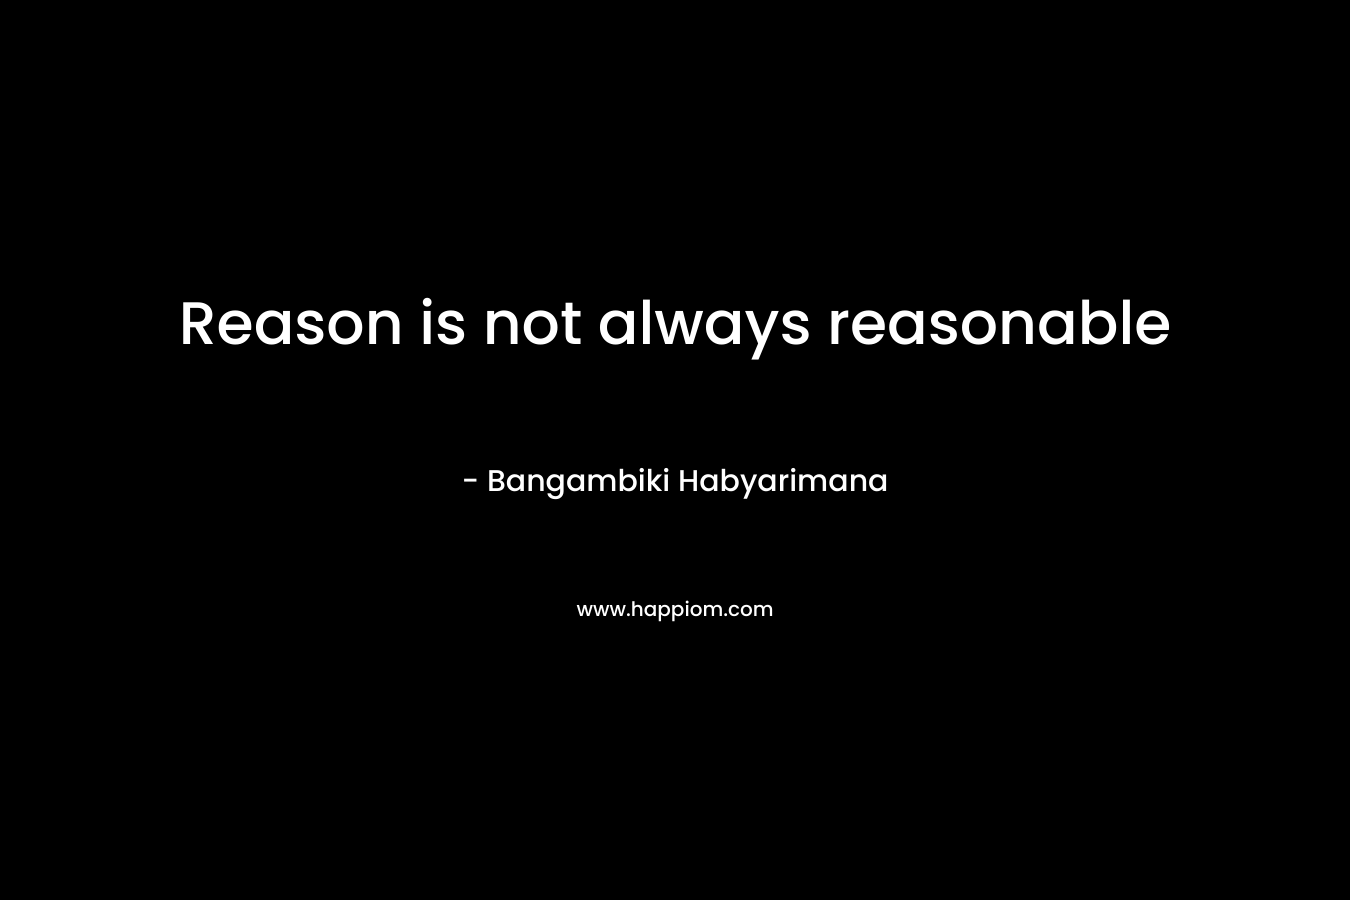 Reason is not always reasonable